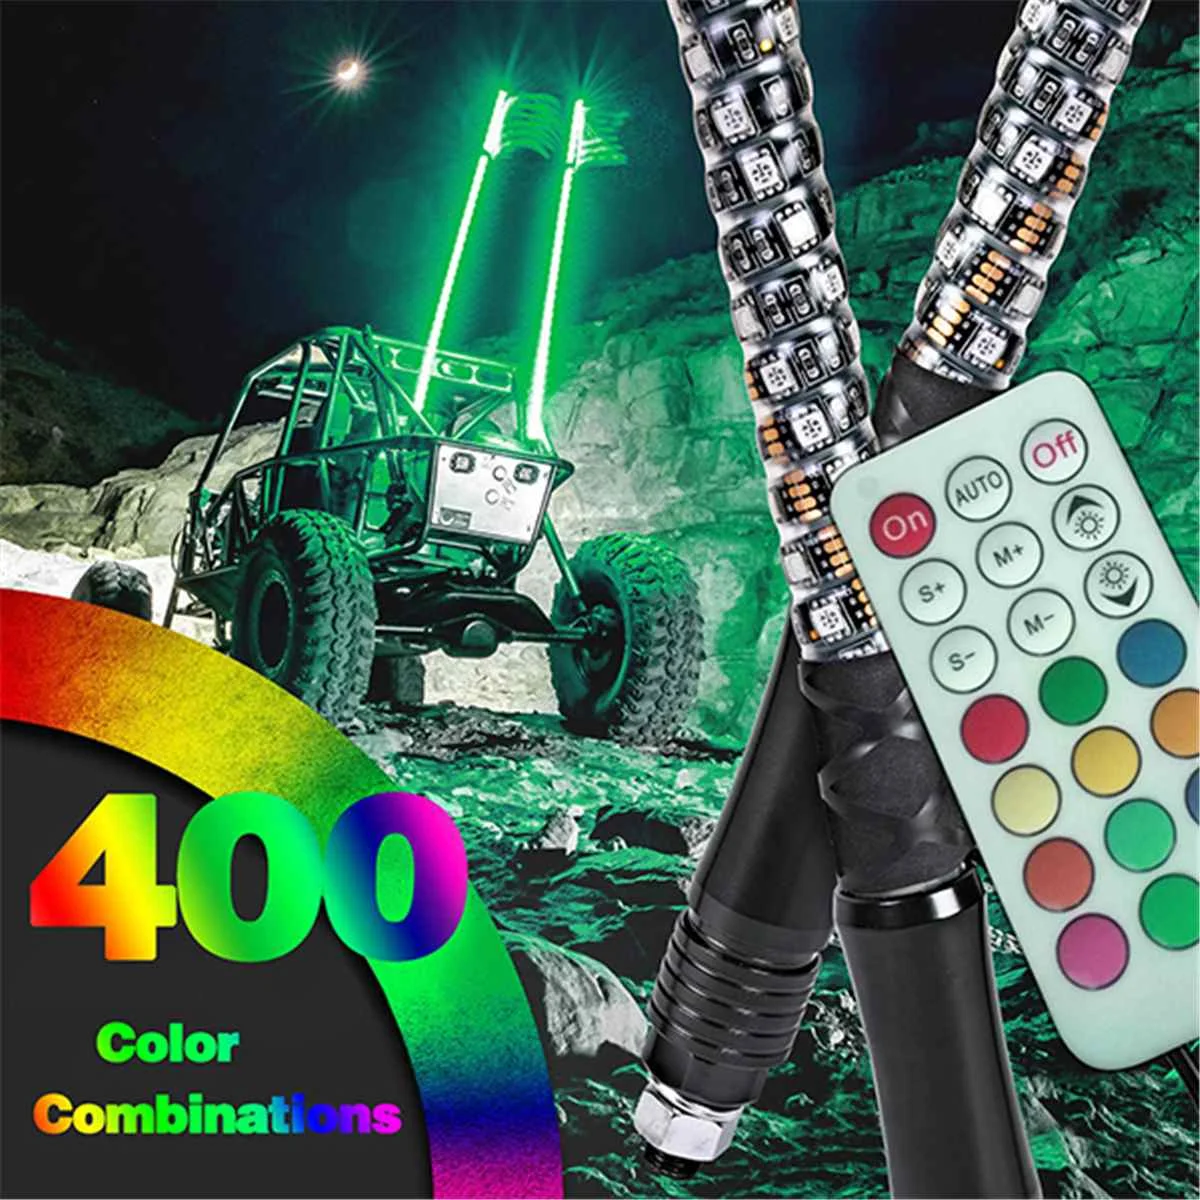 

3/4/5FT LED Whip Light RGB Waterproof Bendable Remote Control Multi-color Super Bright Flagpole Lamp Light for SUV ATV UTV RZR